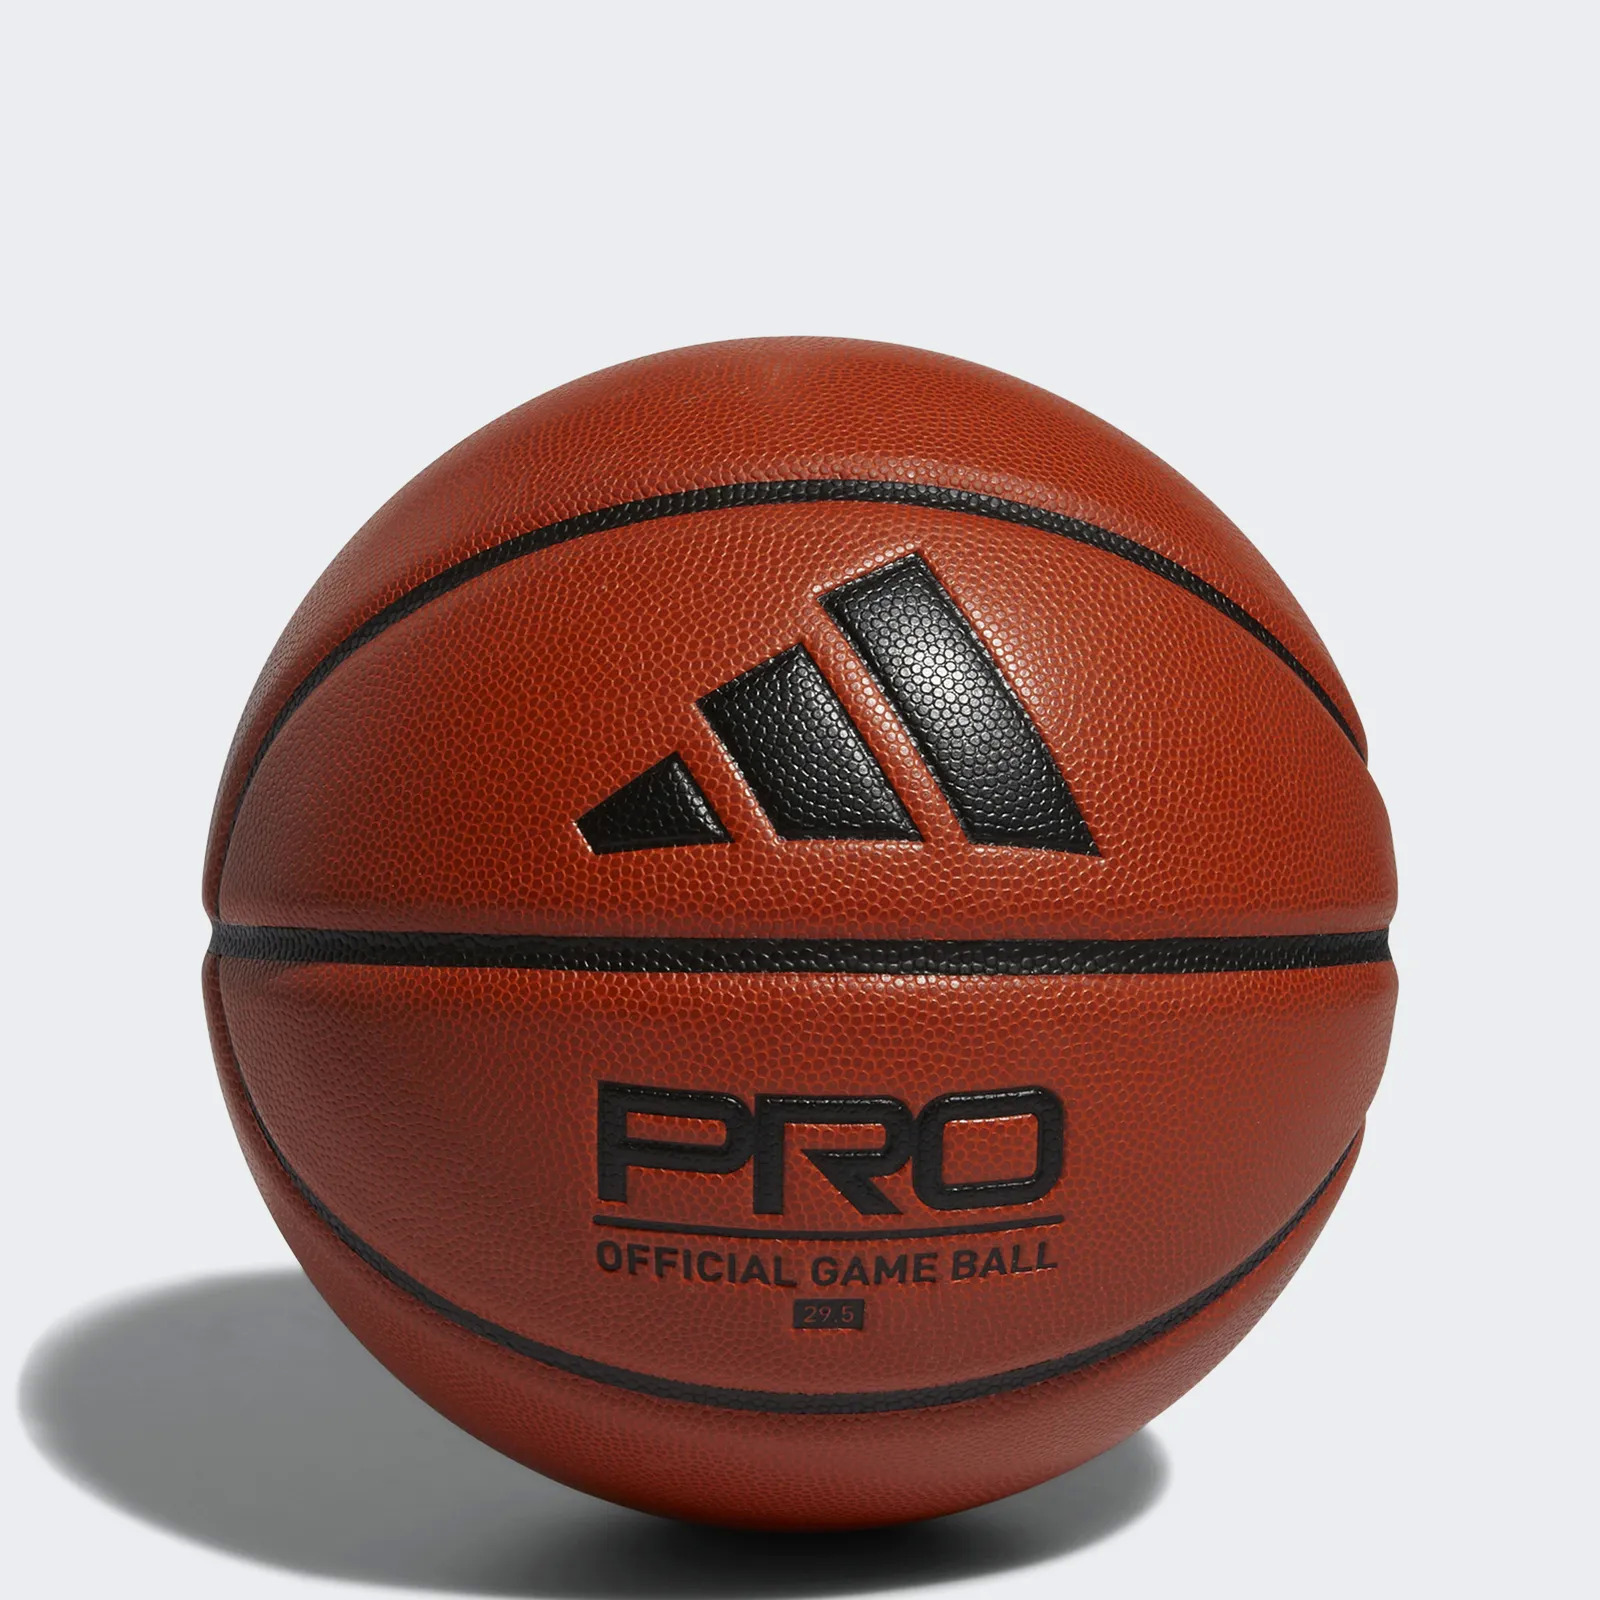 adidas men Pro 3.0 Official Game Ball $19.8 at adidas via eBay